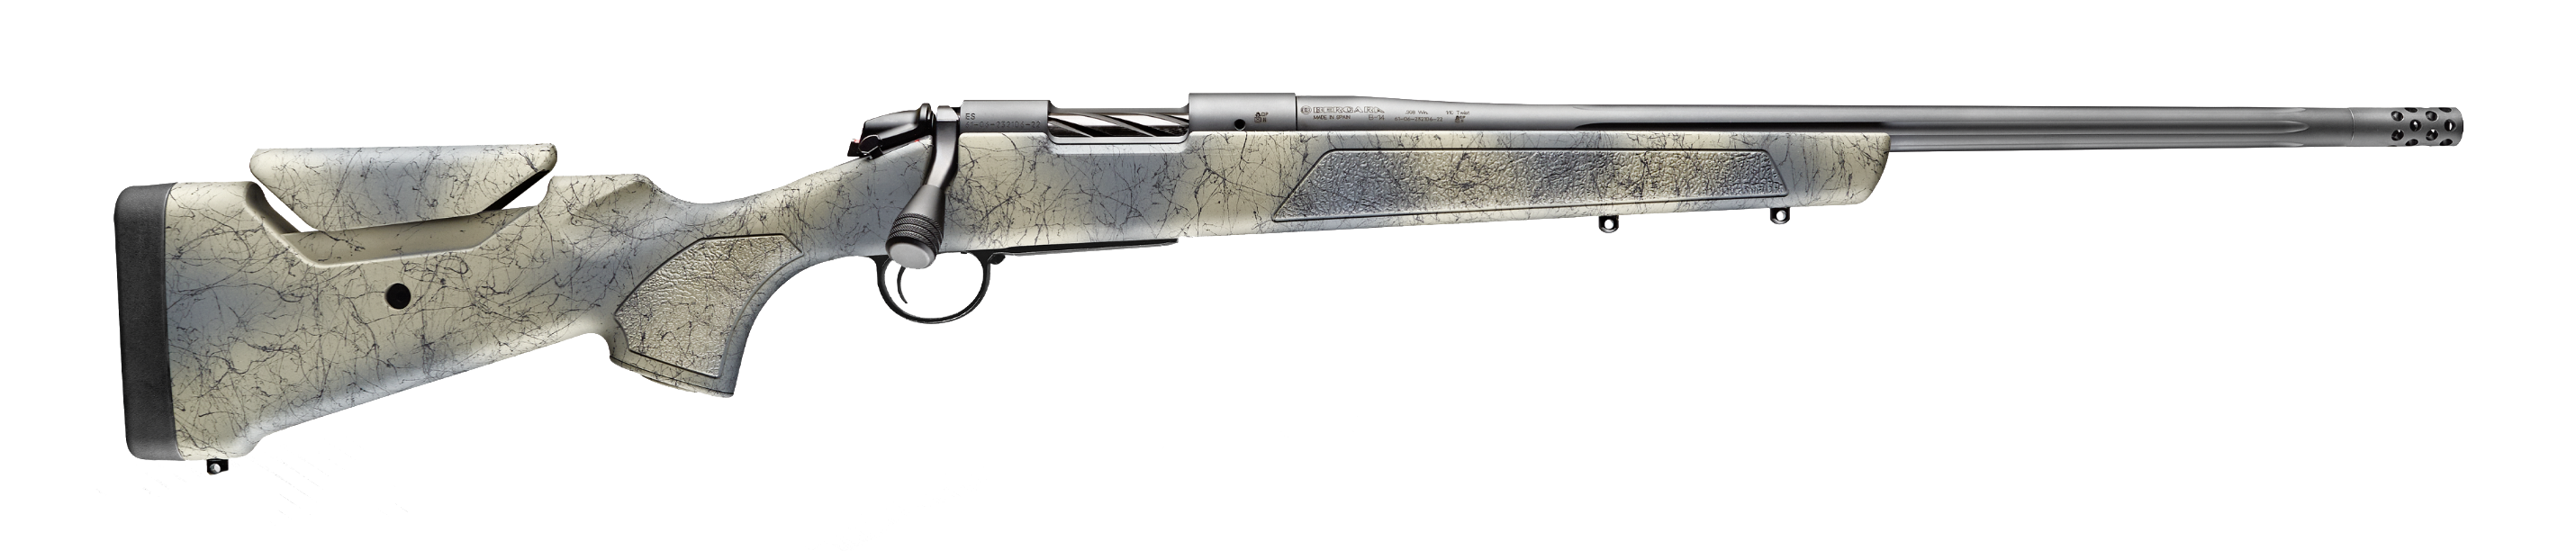 Bergara Sierra rifle with white background